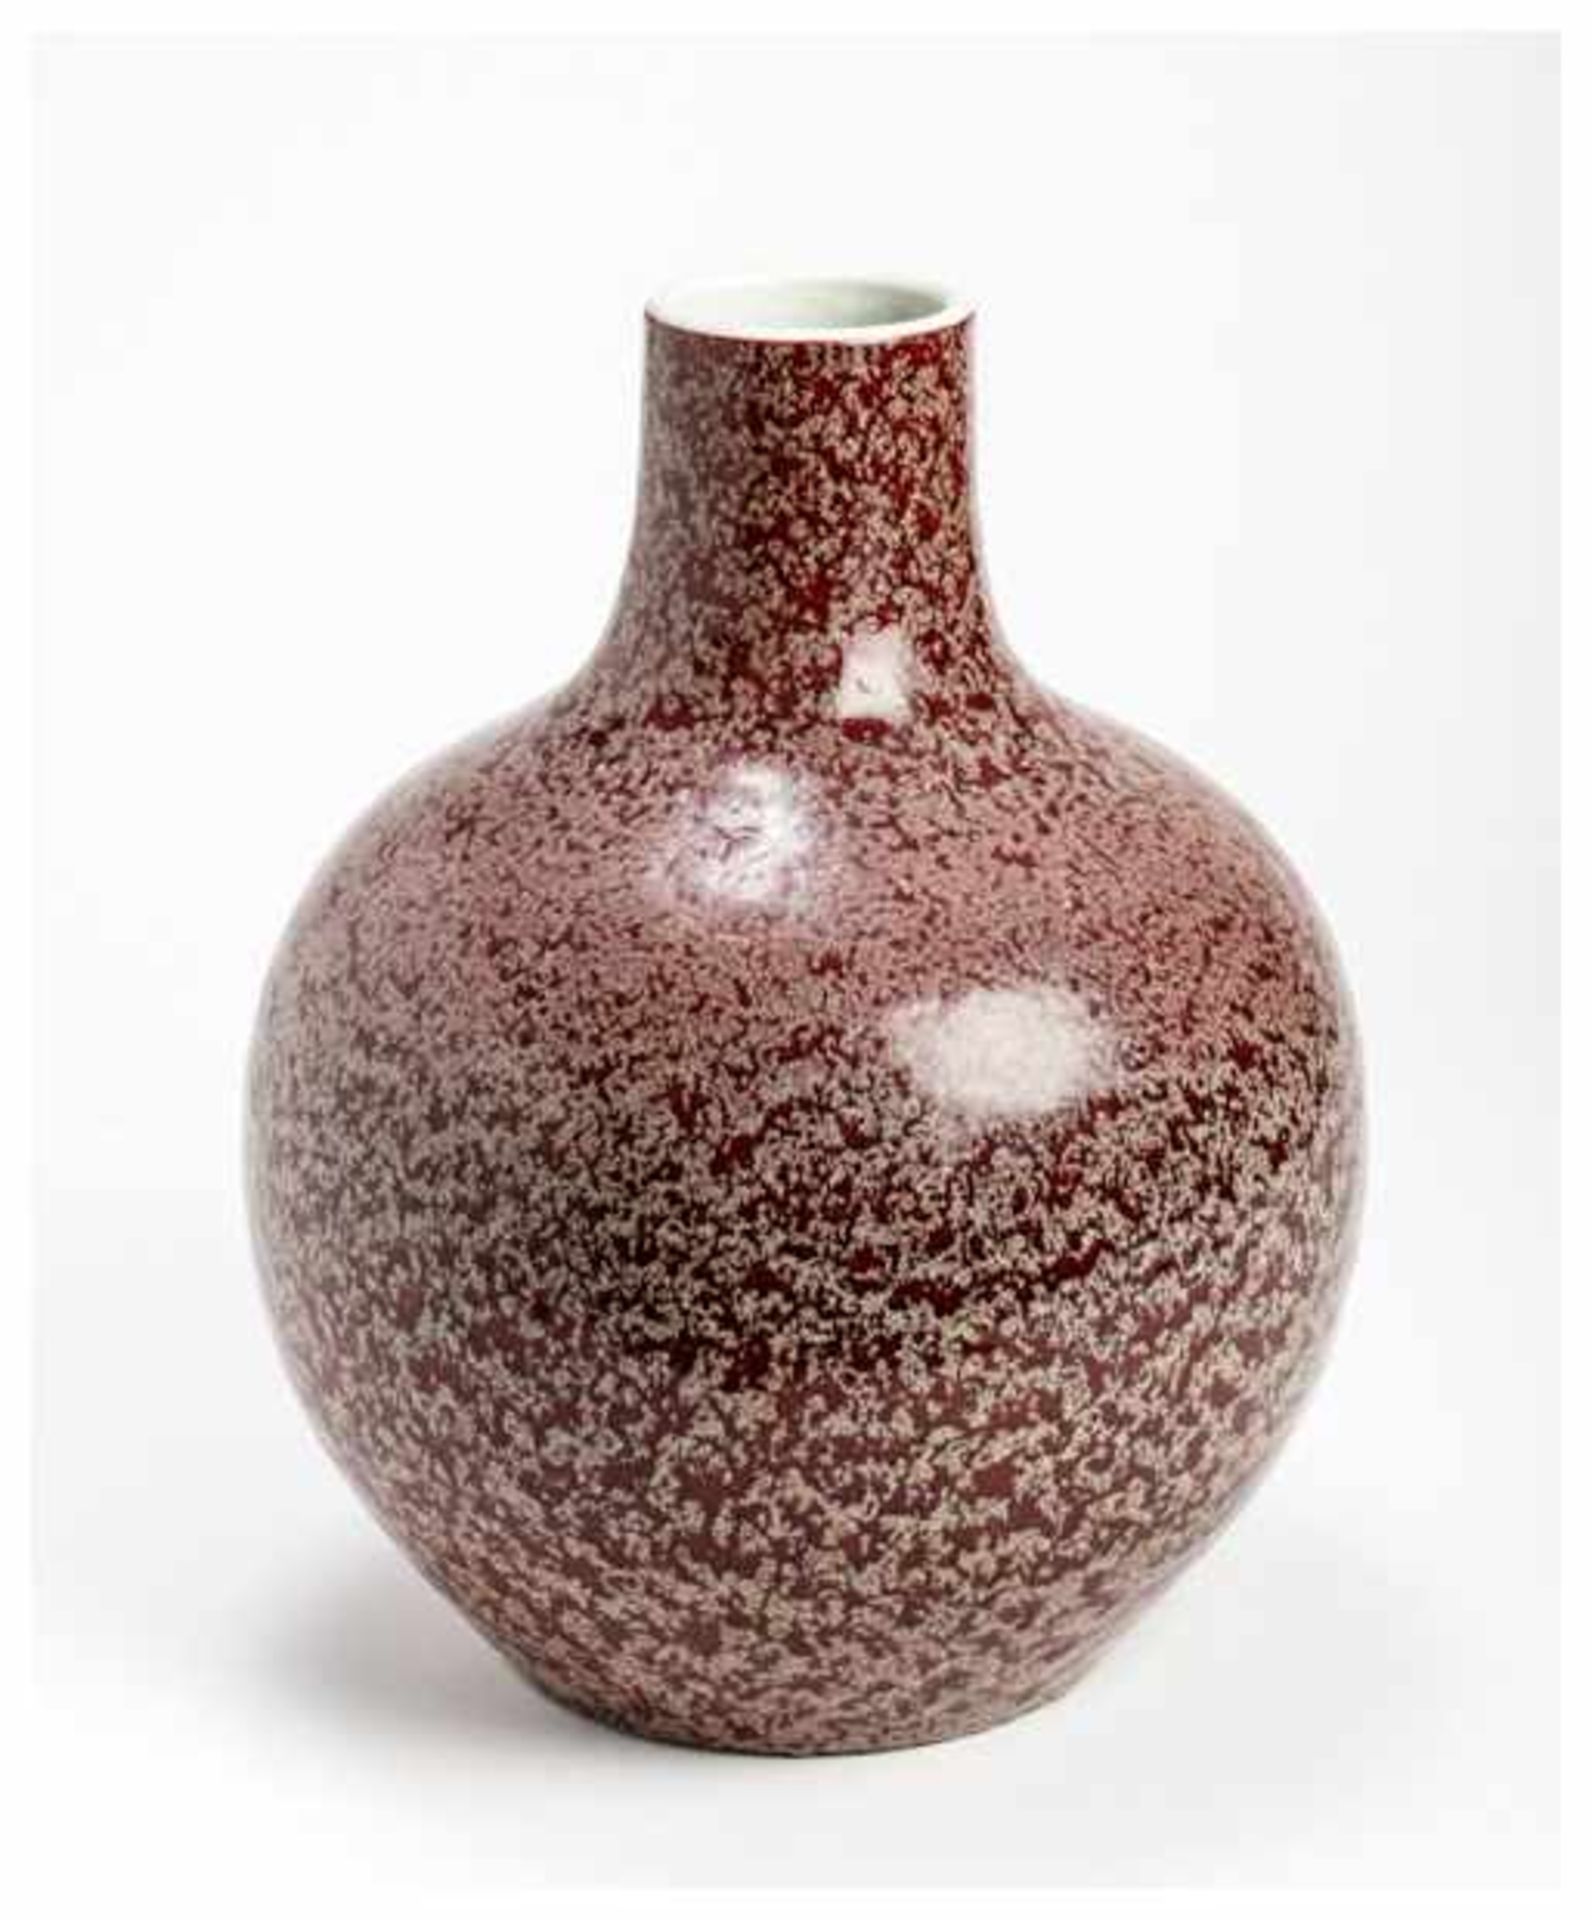 A PORCELAIN VASE WITH MOTTLED CREAM GLAZE Porcelain. China, Qing dynastyOf globular form with a